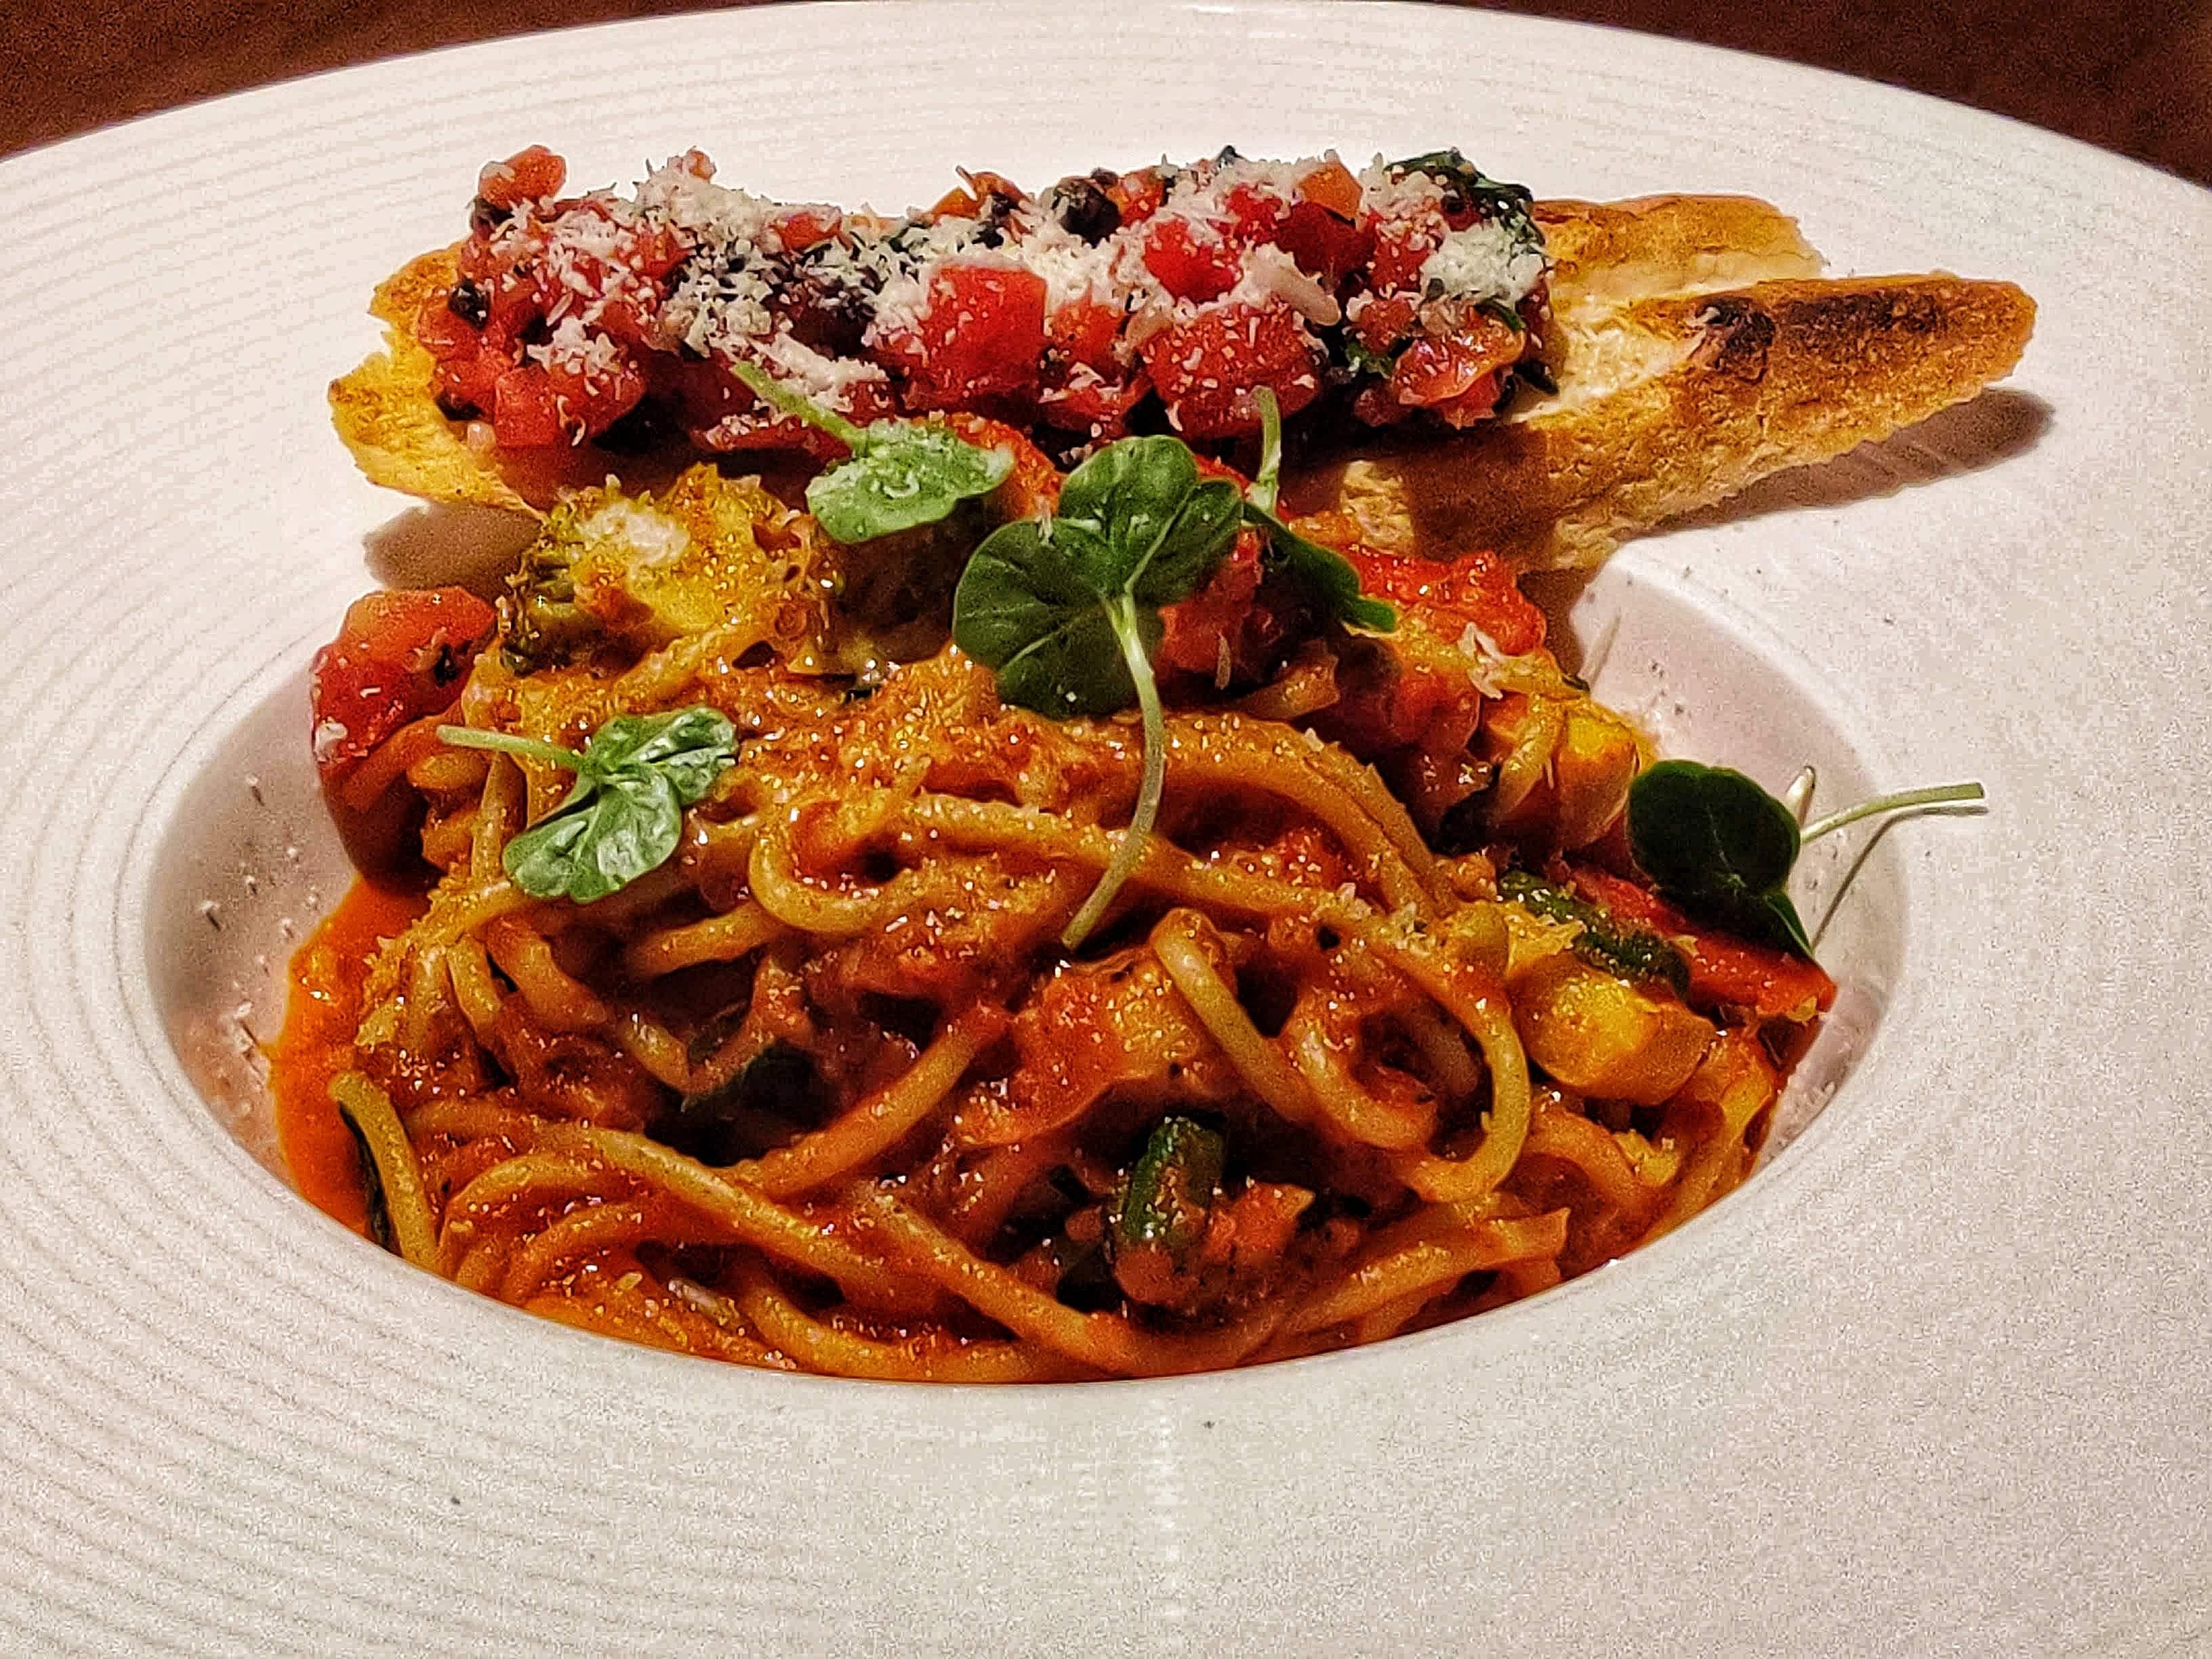 Cuisine,Food,Dish,Ingredient,Fra diavolo sauce,Italian food,Amatriciana sauce,Pasta pomodoro,Spaghetti,Spaghetti alla puttanesca